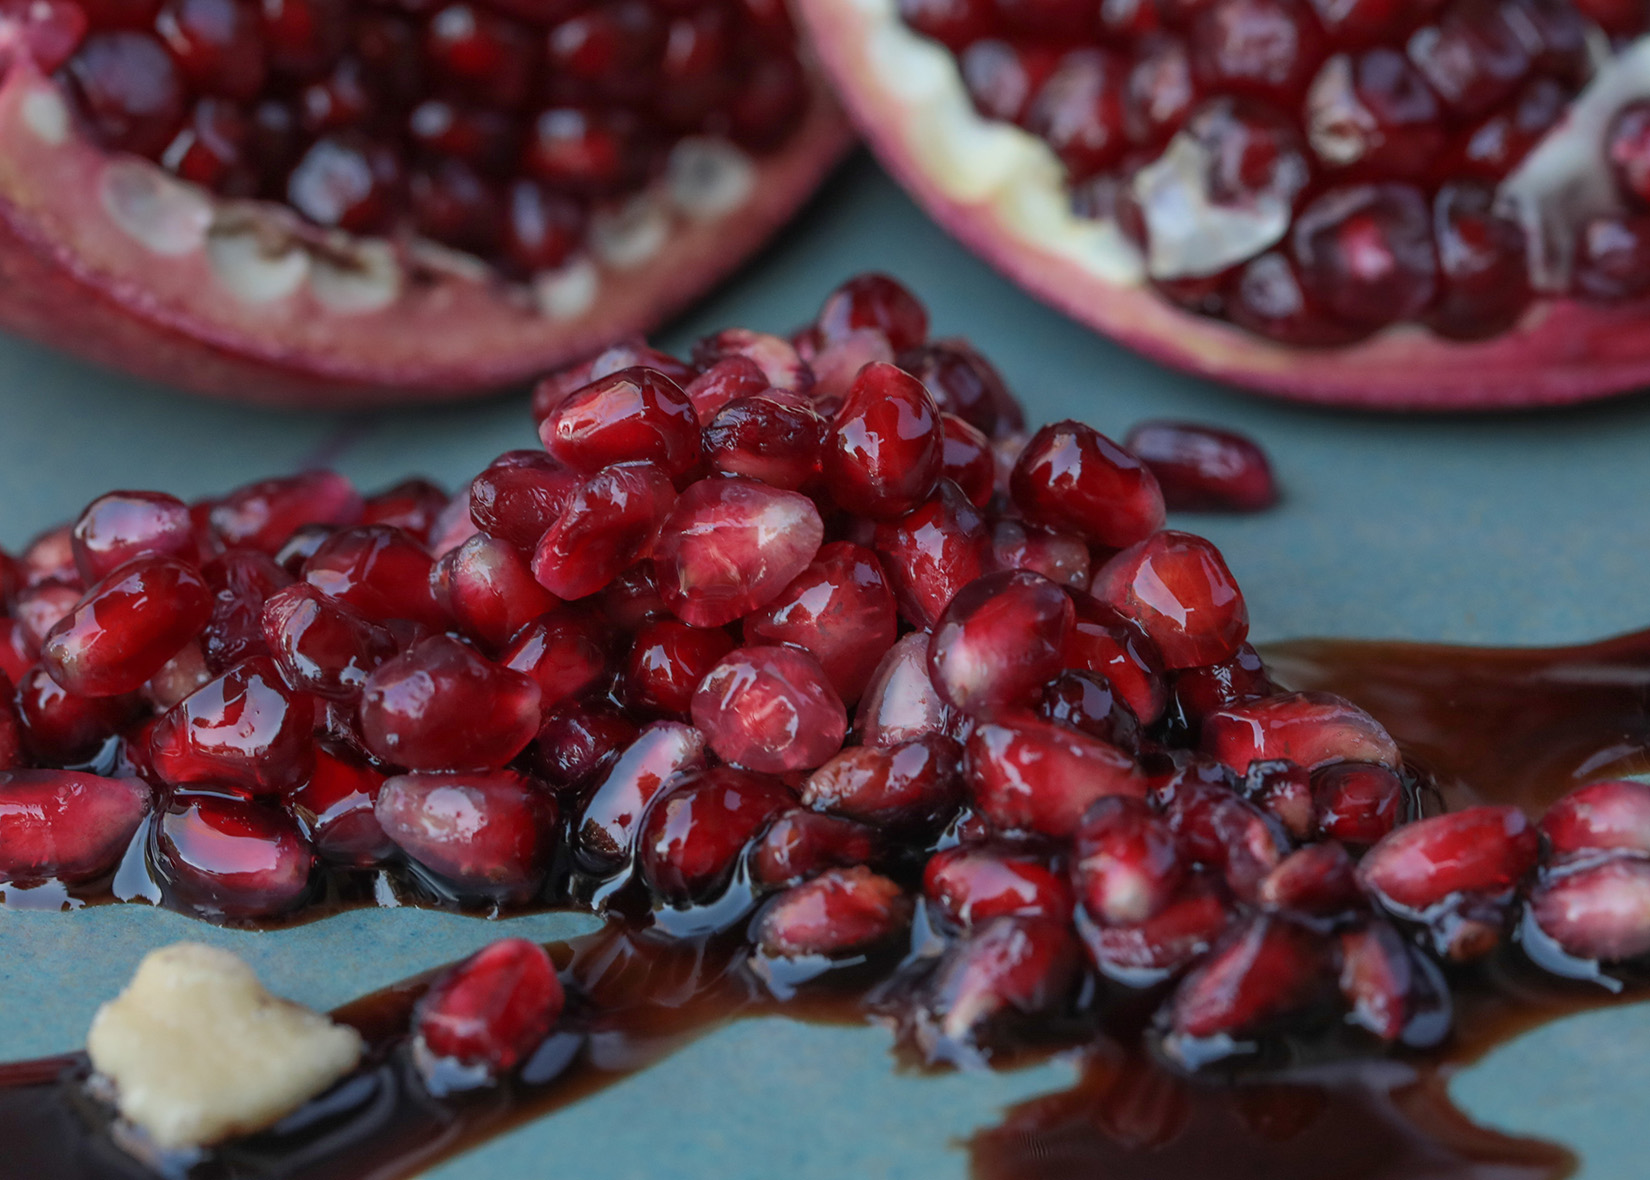 Pomegranate Seeds Taste Like Alcohol